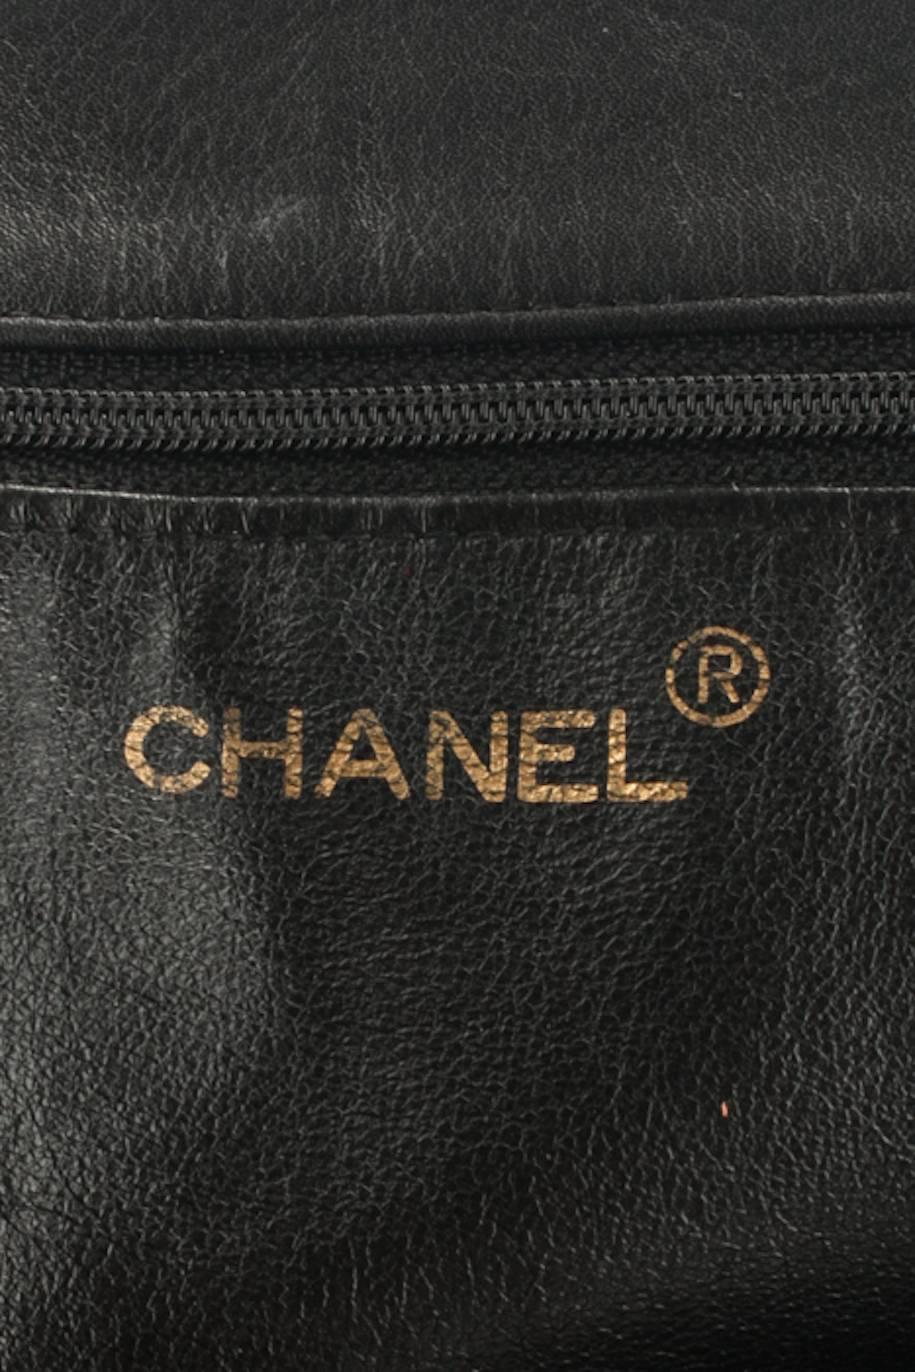 Chanel Black Lambskin Leather Gold Chain Shoulder Bag Shopper Tote 2